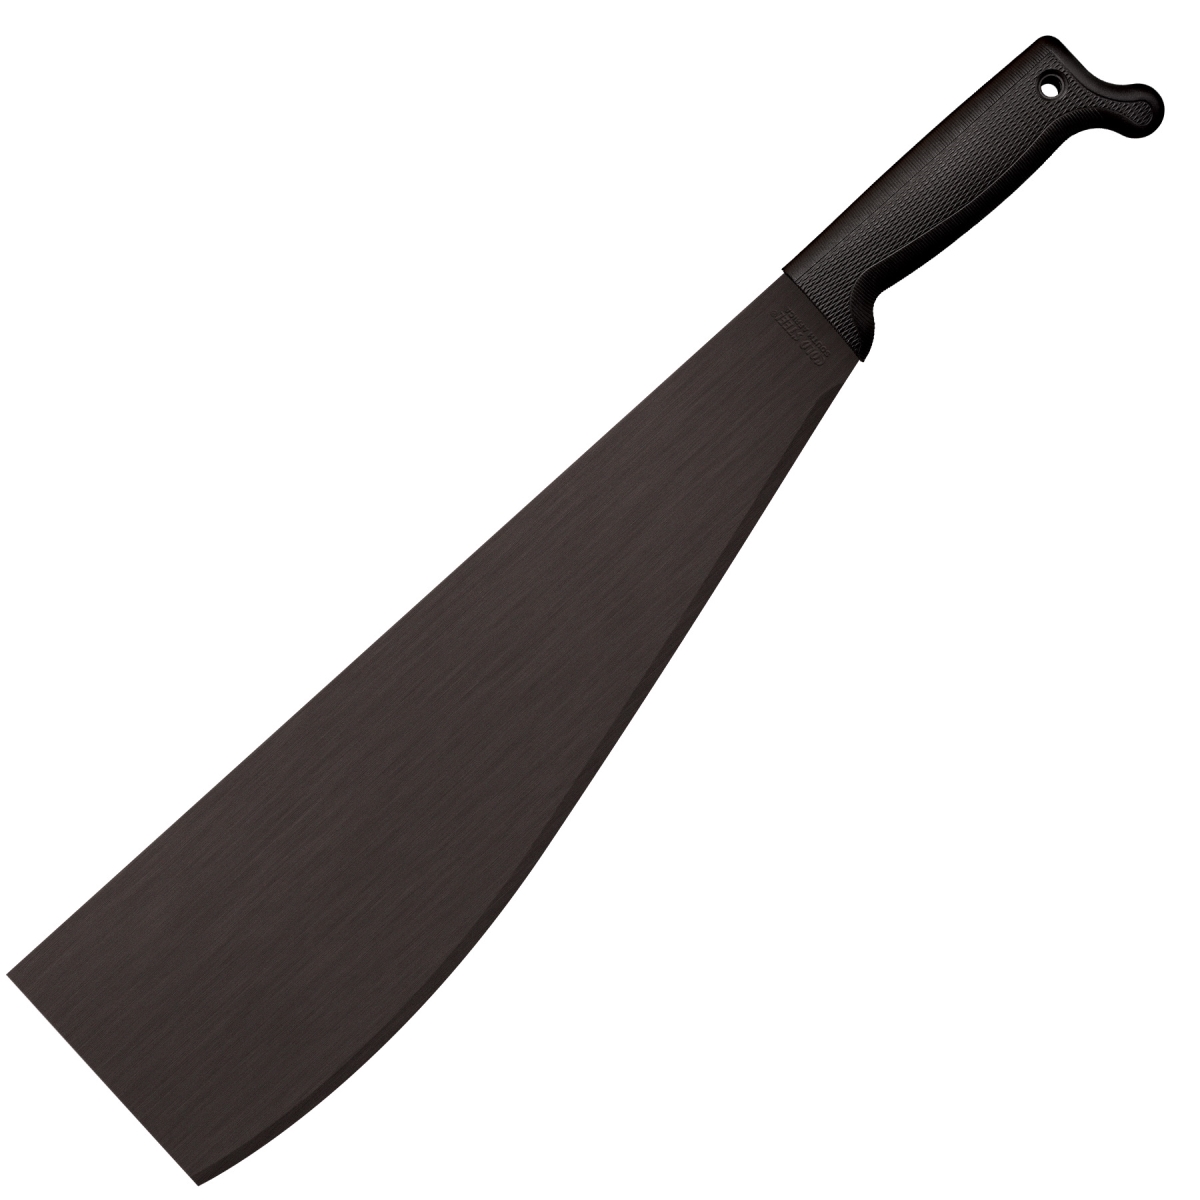 Cld-97lhms 2019 5.62 In. 1055 Carbon Steel Heavy Machete Tool With Baked-on Anti Rust Matte Steel Blade Long Polypropylene Handles, Black